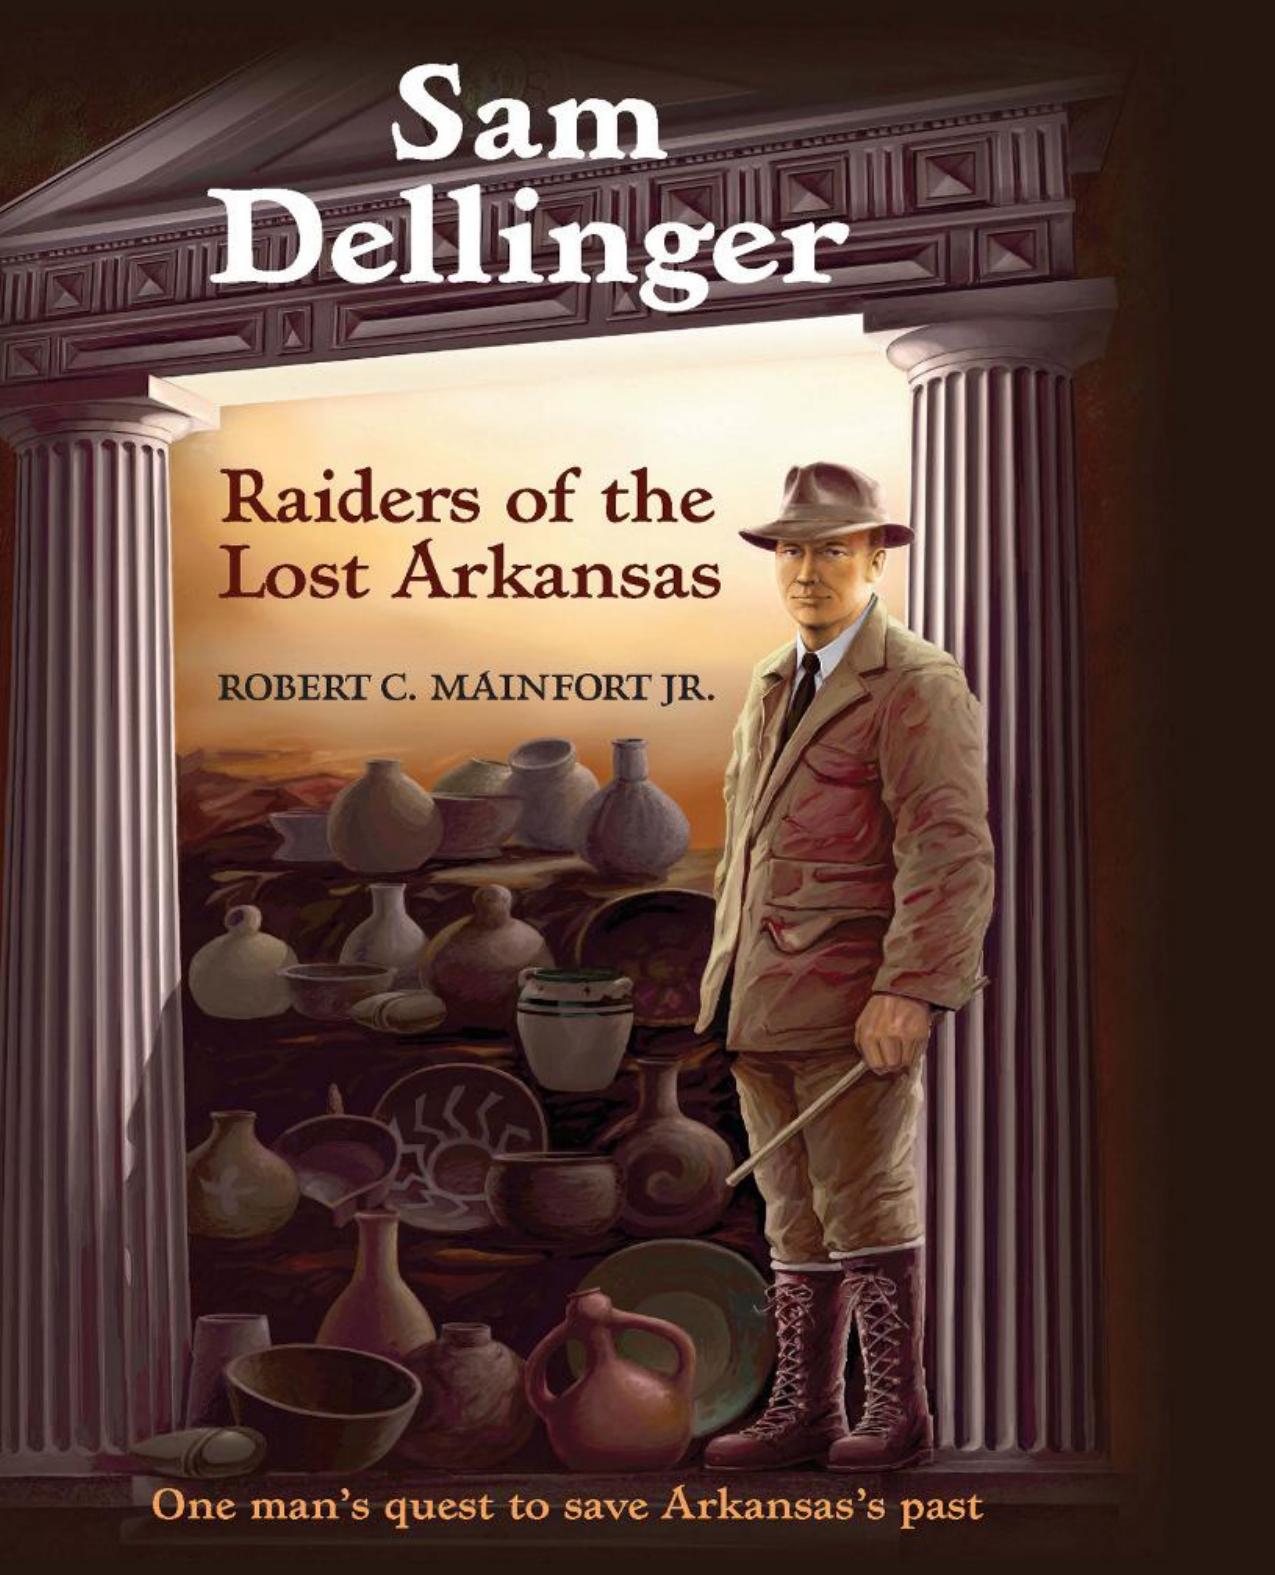 Sam Dellinger : Raiders of the Lost Arkansas by Robert C. Mainfort